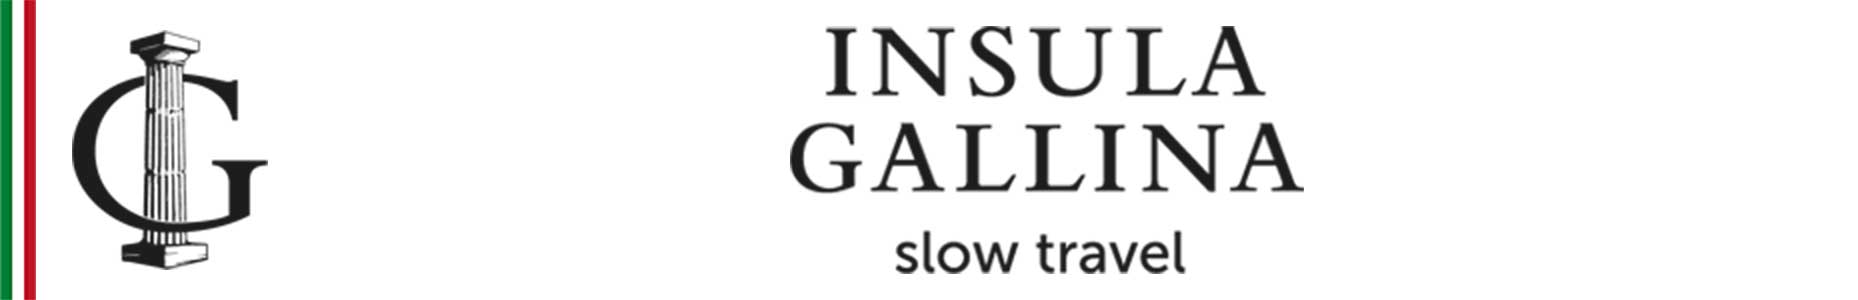 Insula Gallina - slow travel - Logo